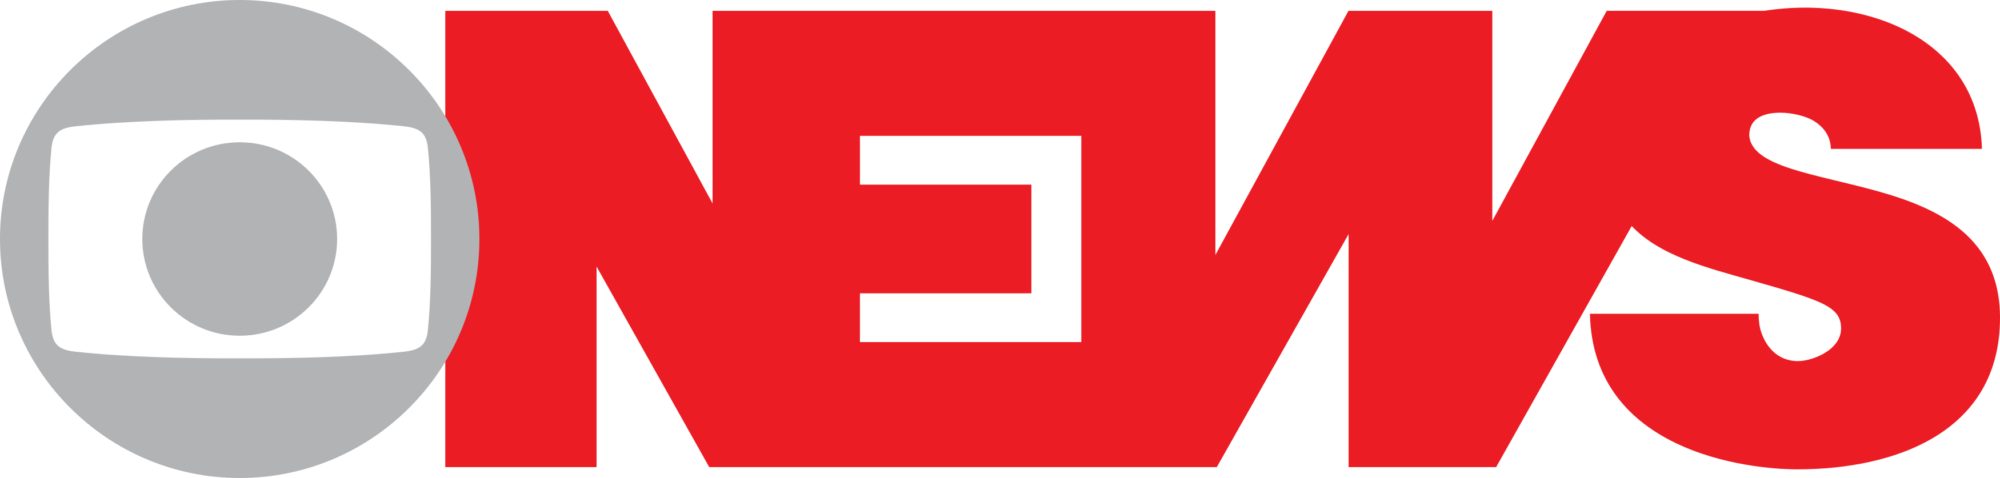 globo-news-logo